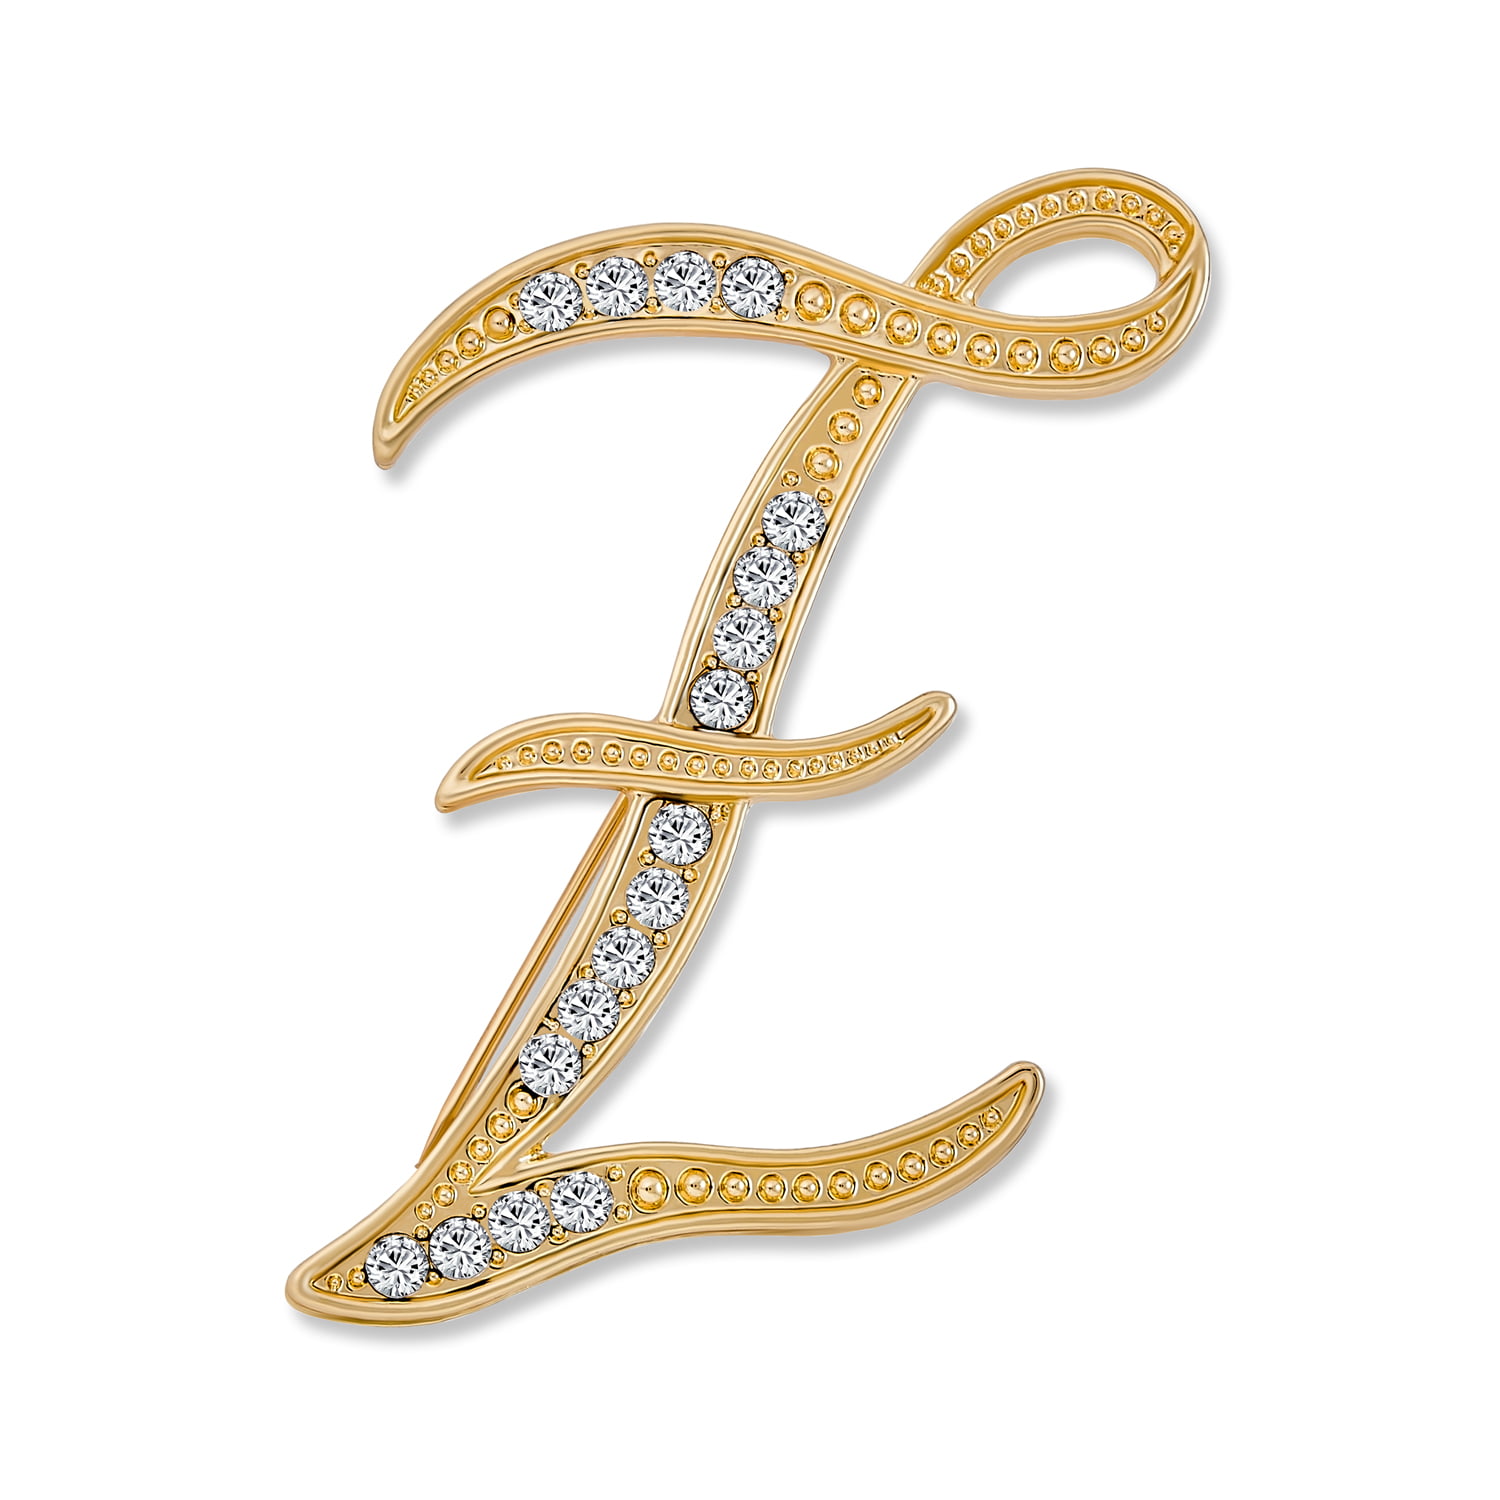 " J " Monogram Letter Lapel Pin W/Tie Back Safety Chain Silver Tone-PINK Enamel 